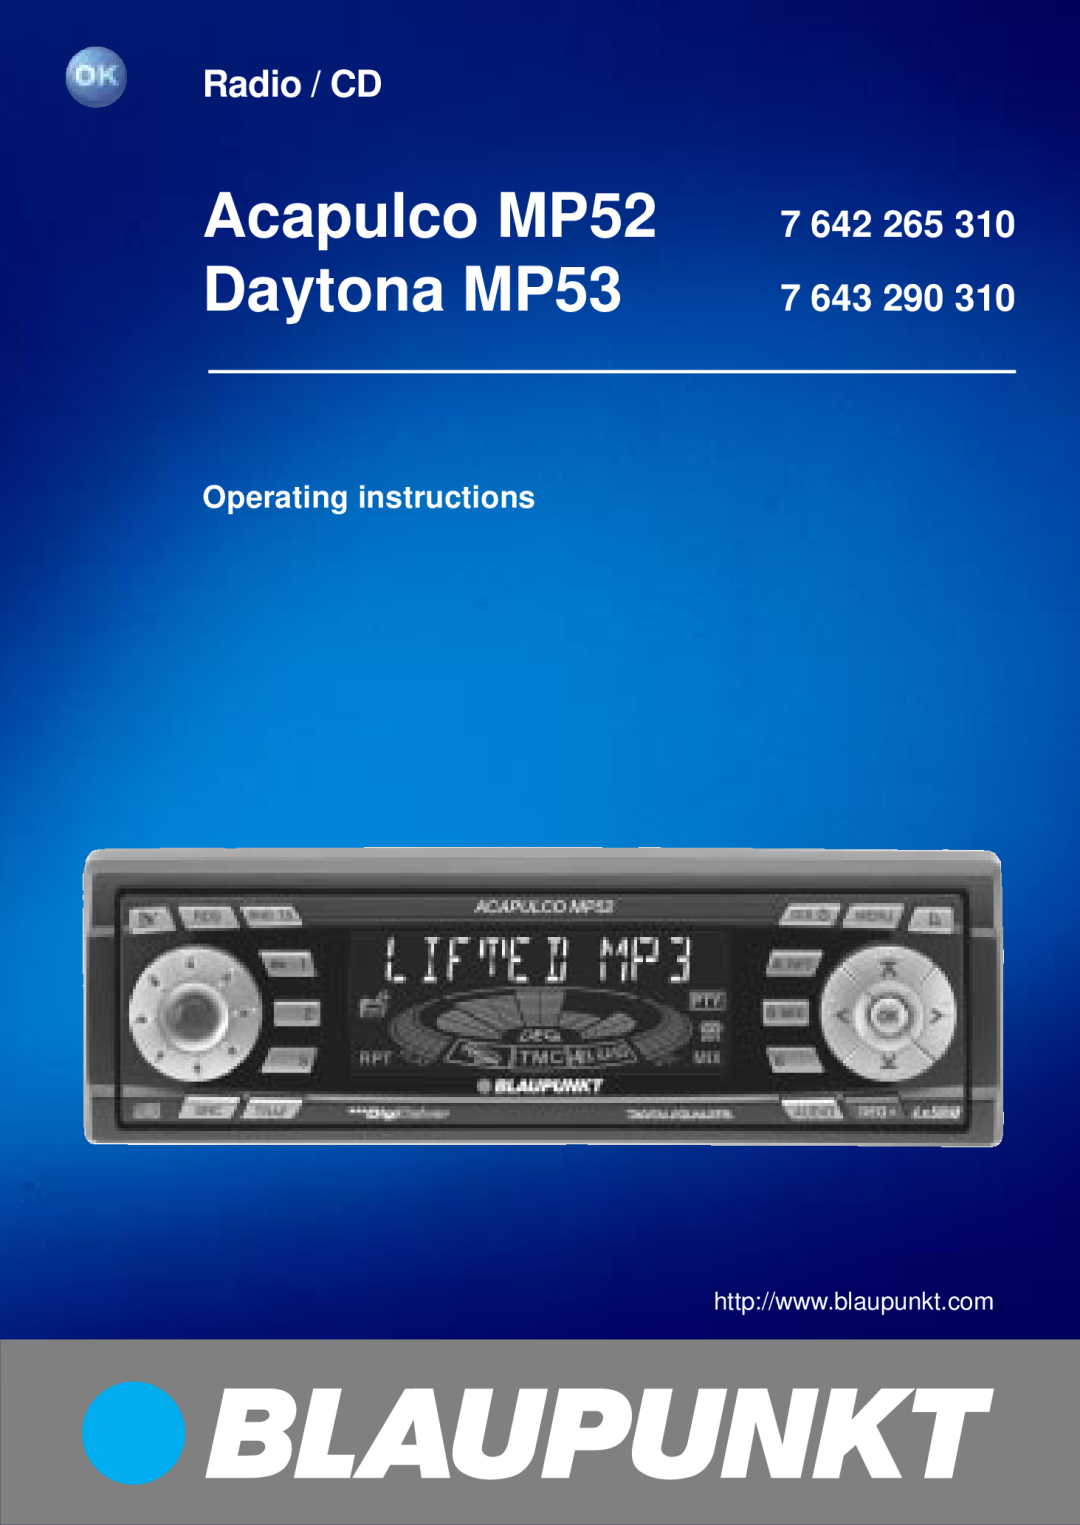 Blaupunkt Daytona MP53 operating instructions Acapulco MP52, Radio / CD, 7 642 265, 7 643 290, Operating instructions 